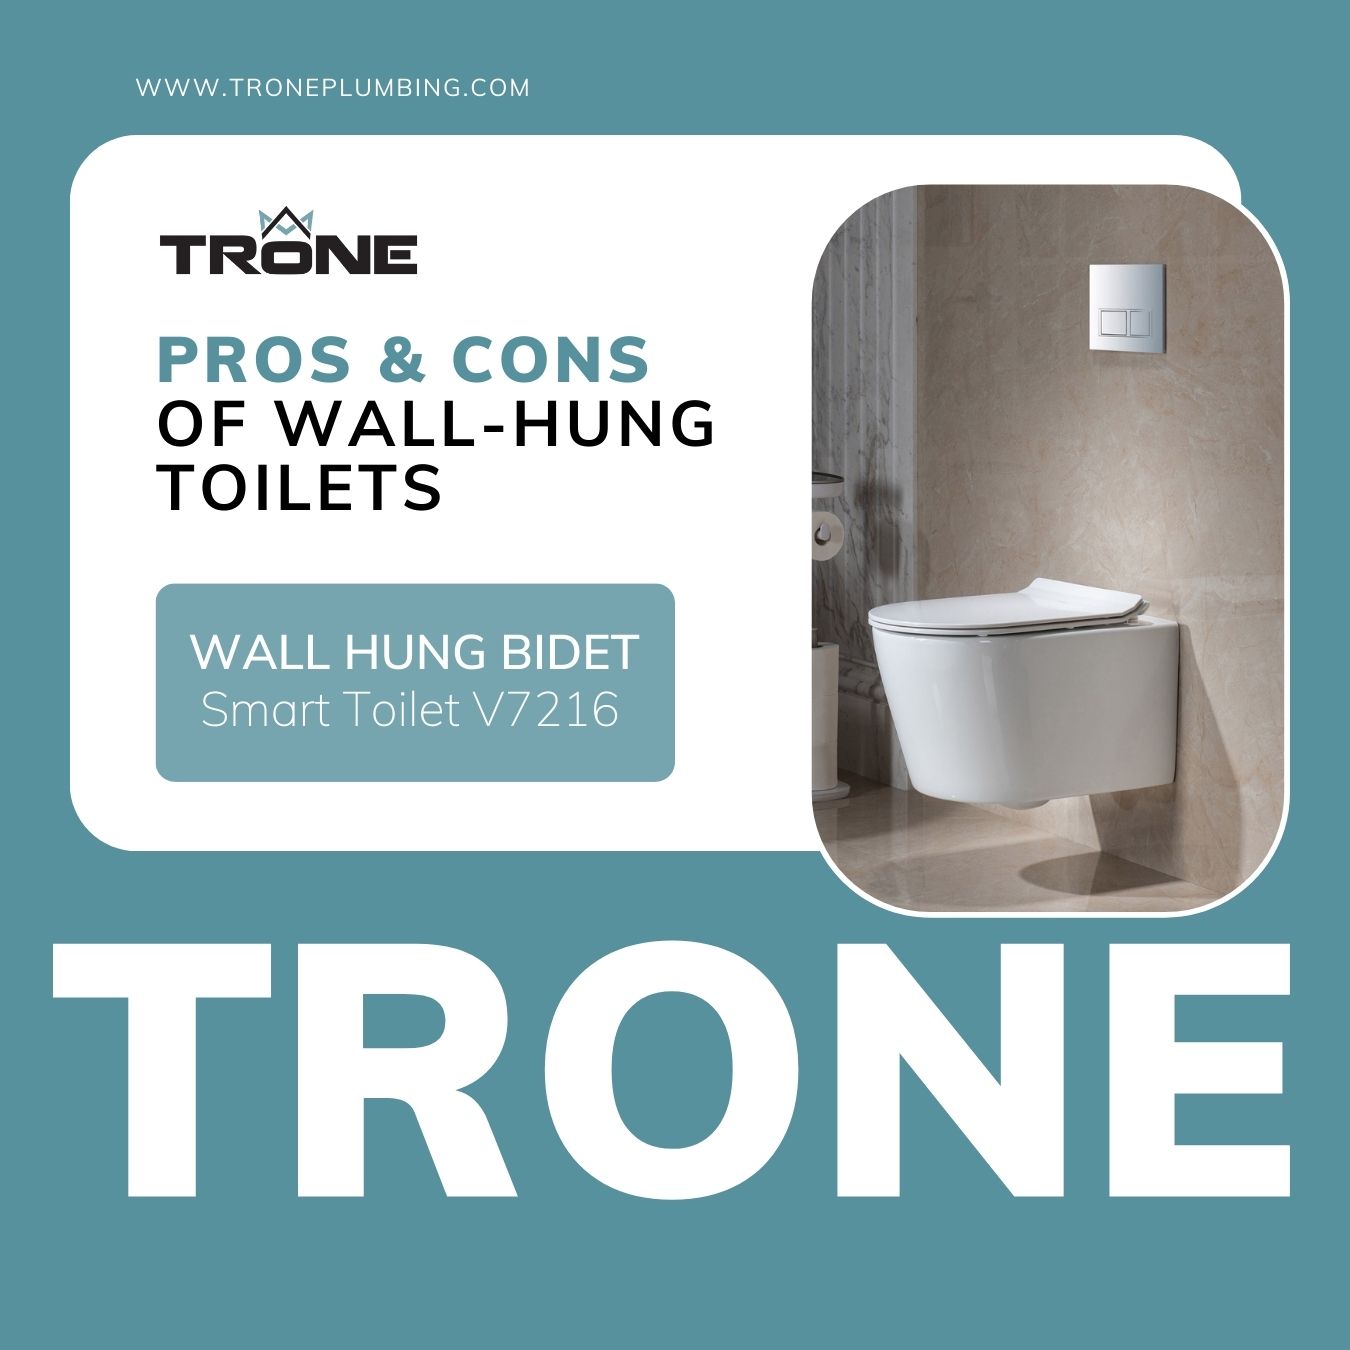 Photo of Trone Wall-Hung Bidet Toilet.